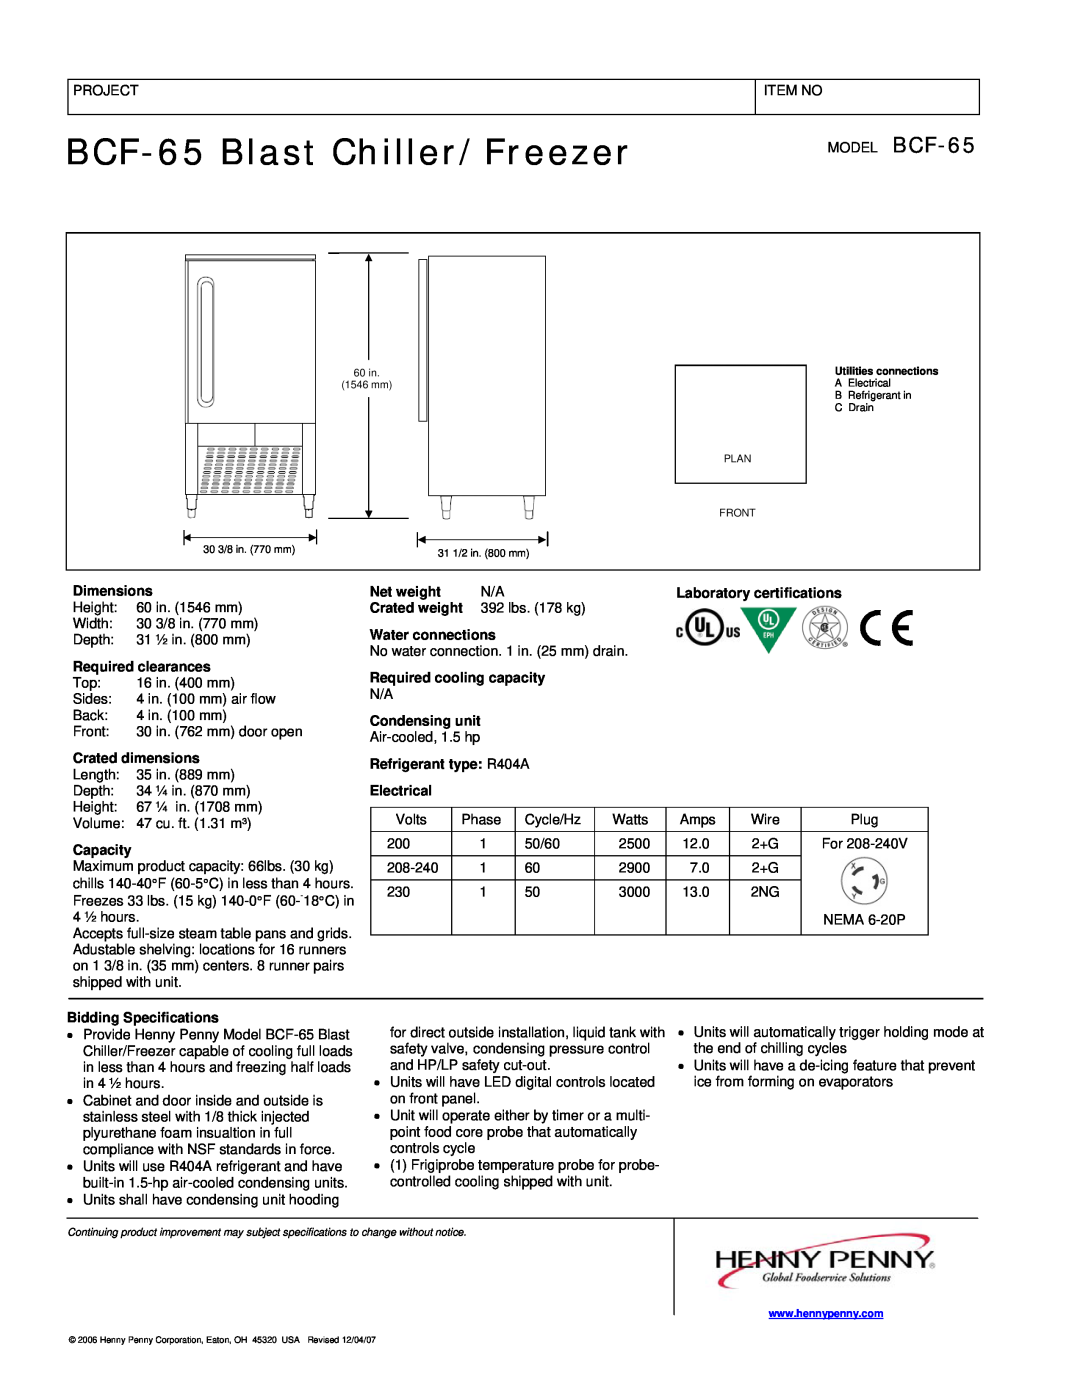 Henny Penny manual BCF-65Blast Chiller/Freezer, Dimensions 